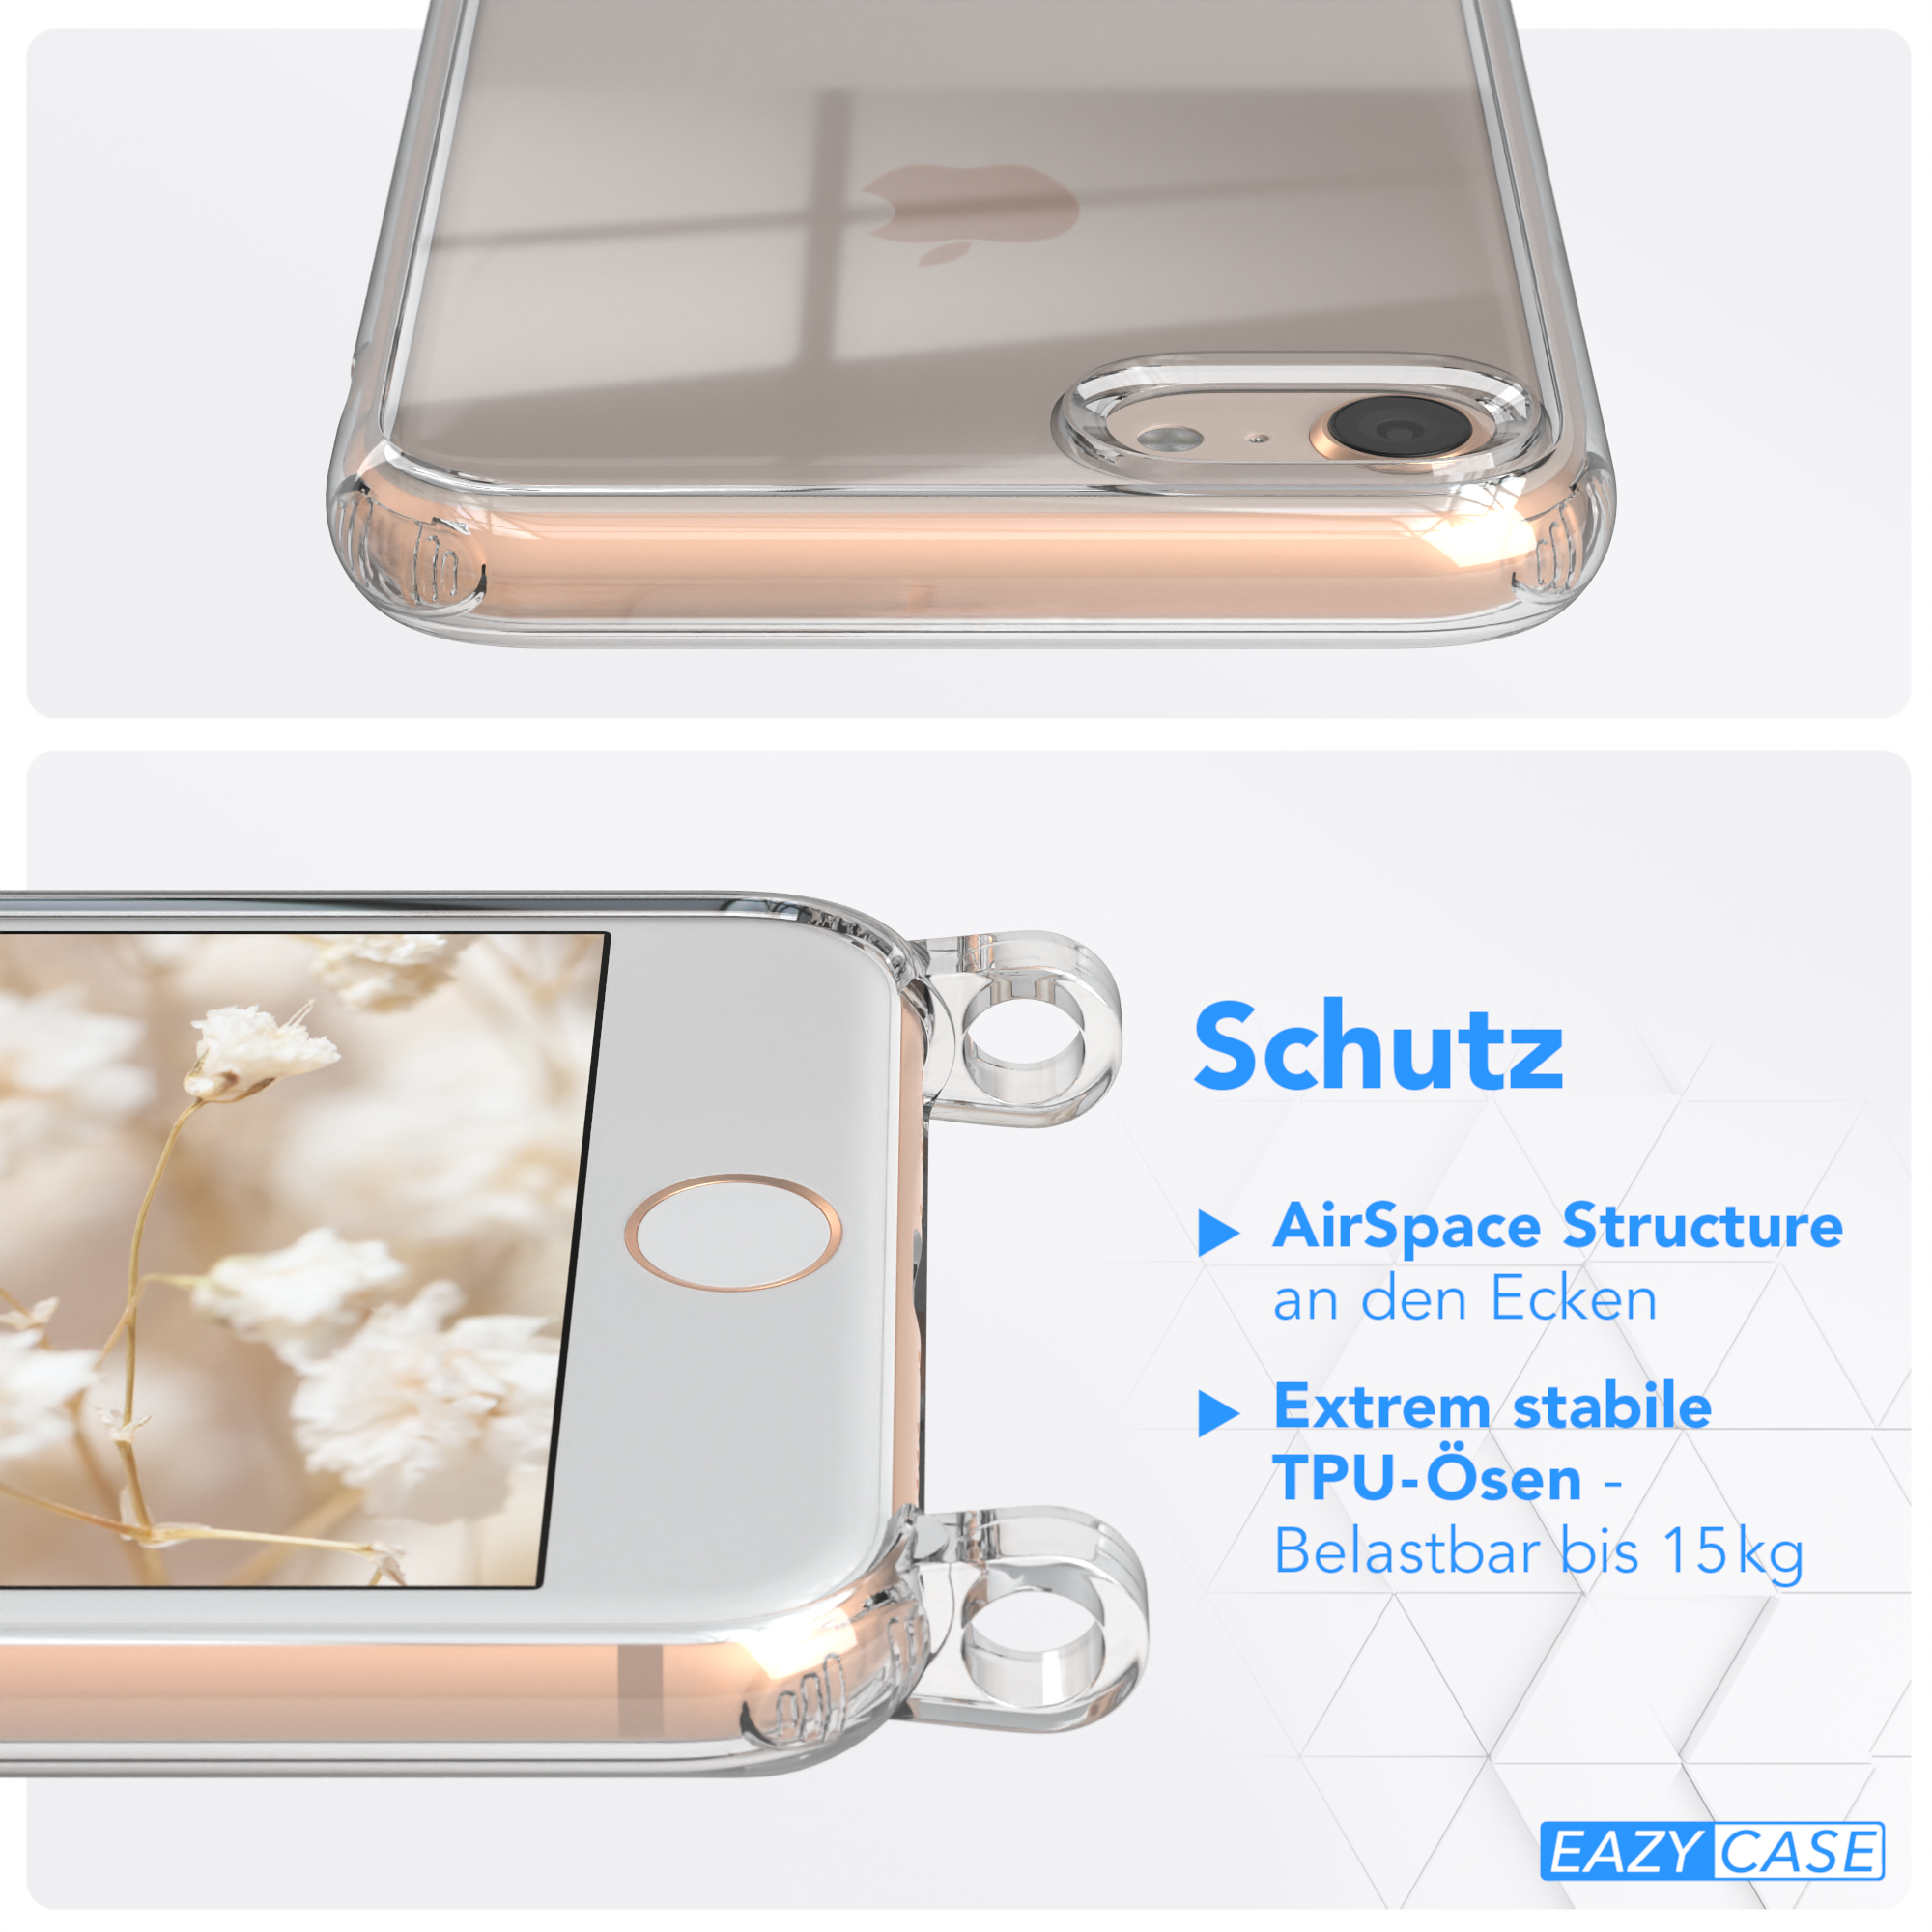 7 Schwarz CASE Kordel Grün EAZY Style, 2022 2020, mit iPhone / Umhängetasche, SE Apple, SE / Handyhülle 8, Boho / Transparente iPhone